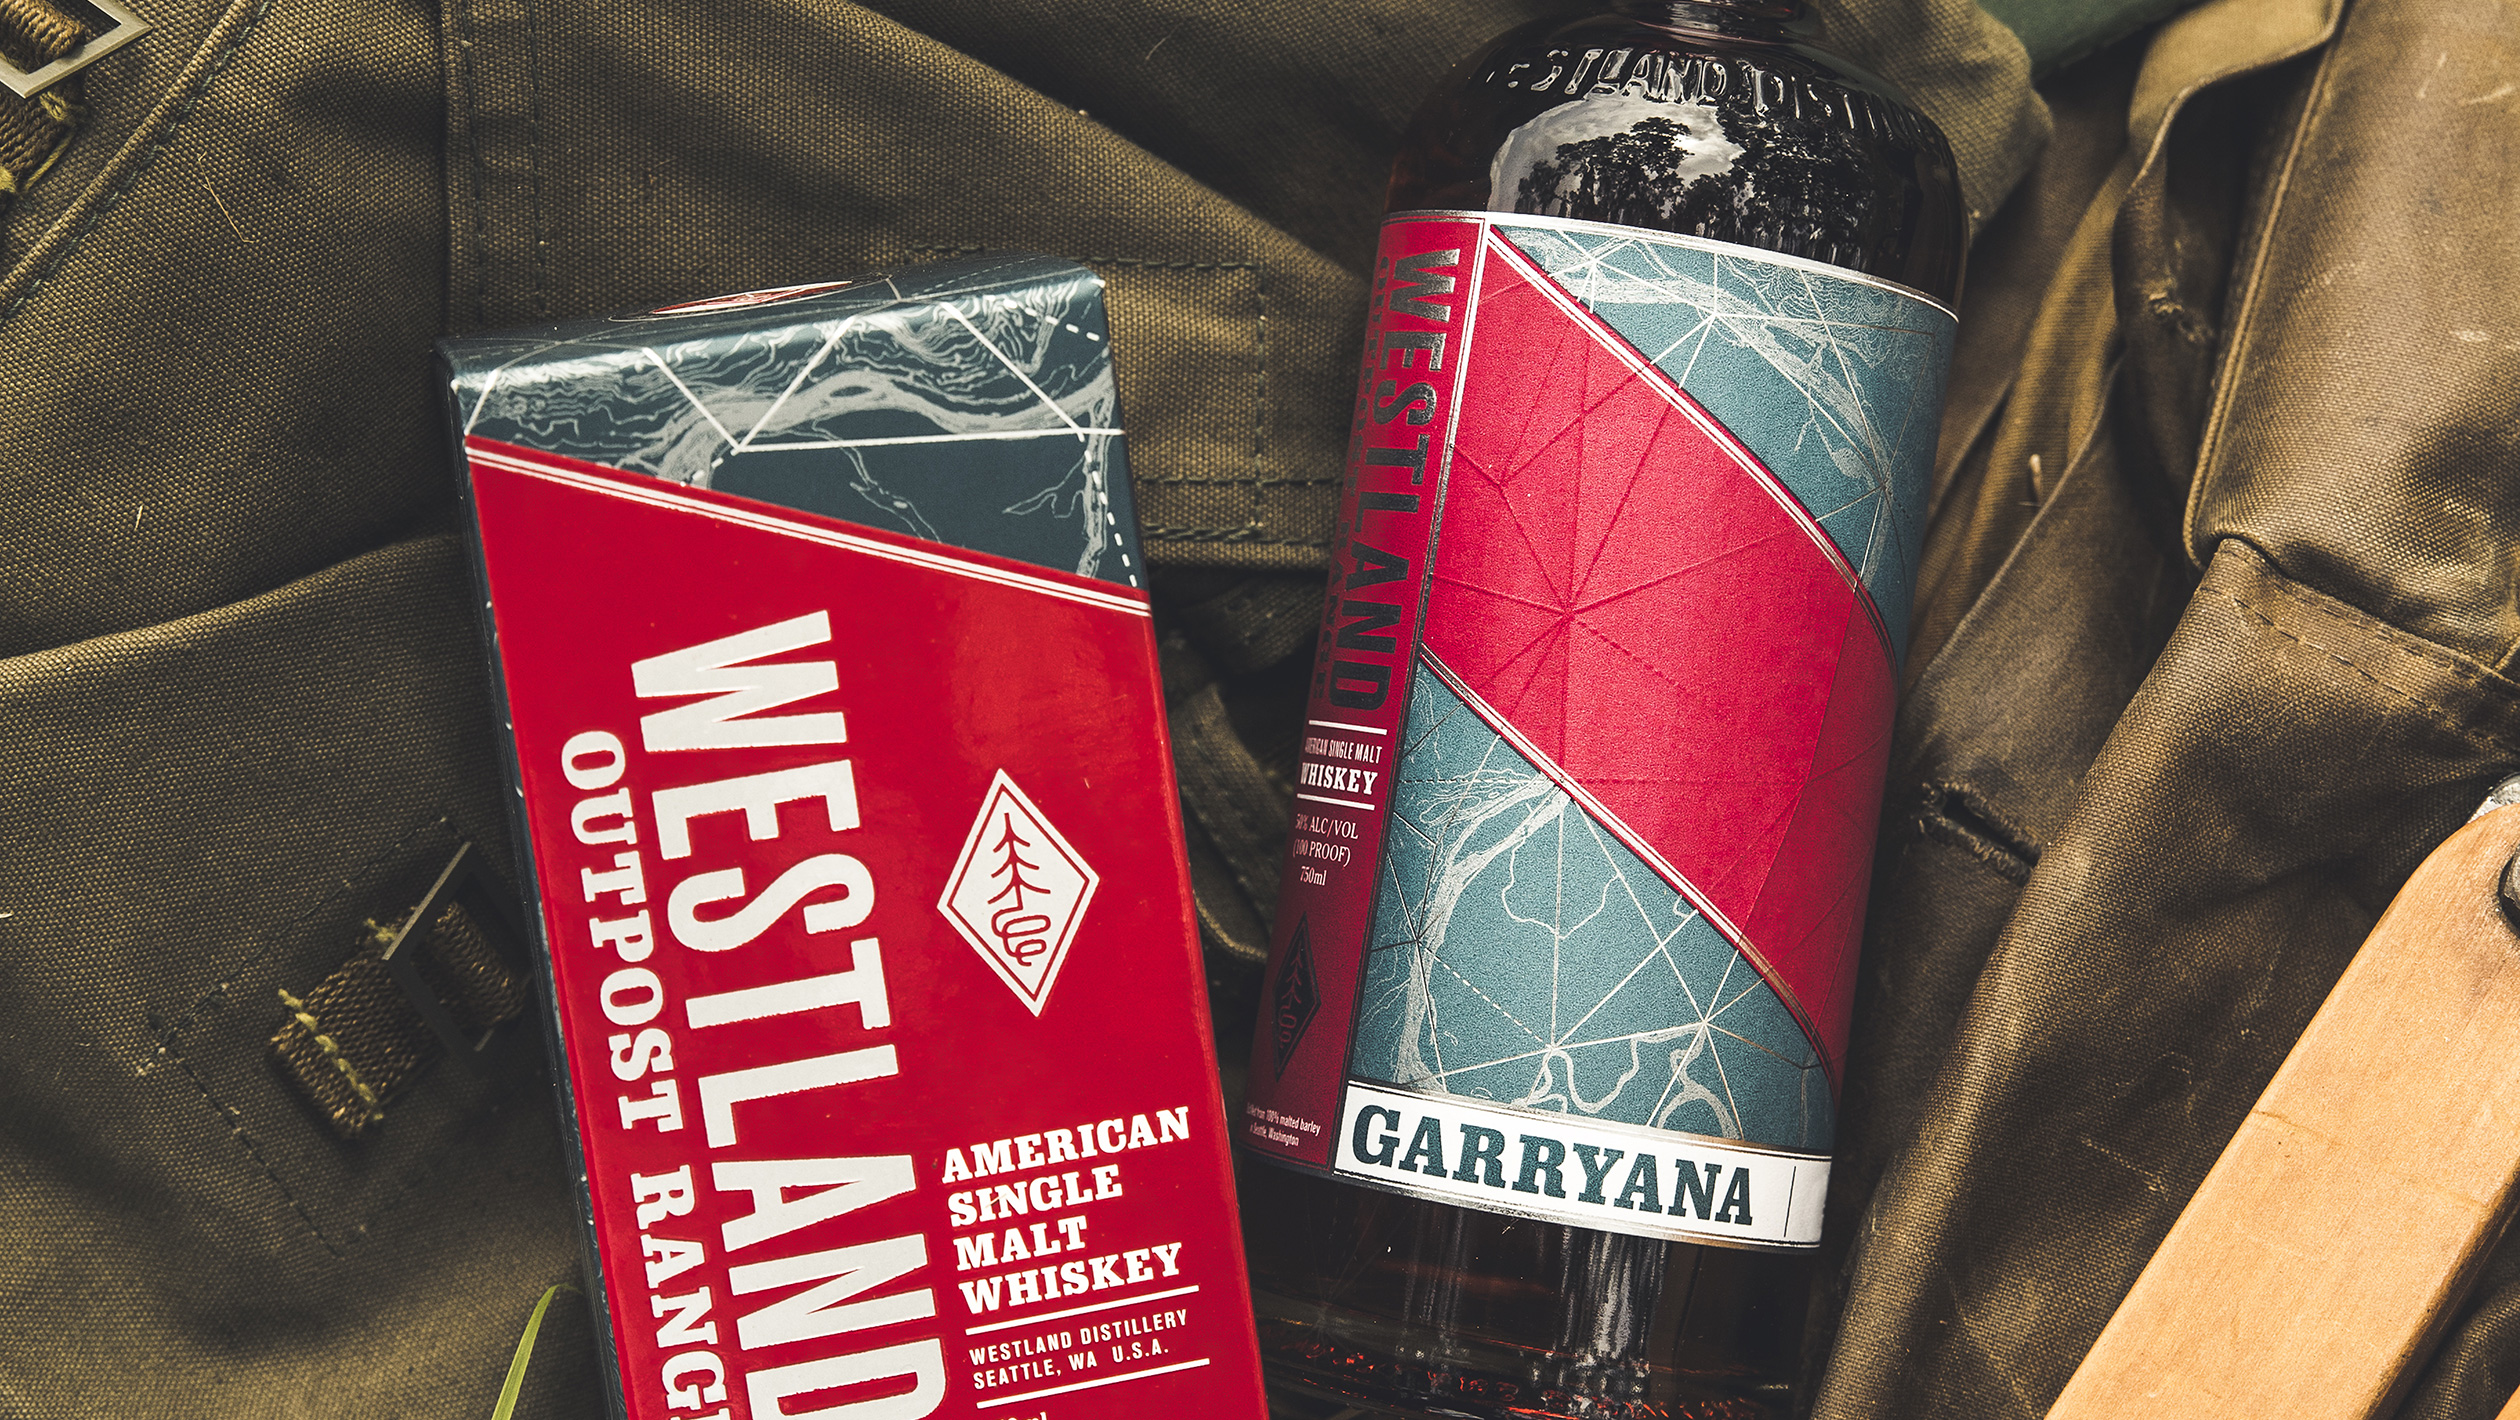 A close up of a bottle of Westland Distillery ‘Garryana’ American Single Malt